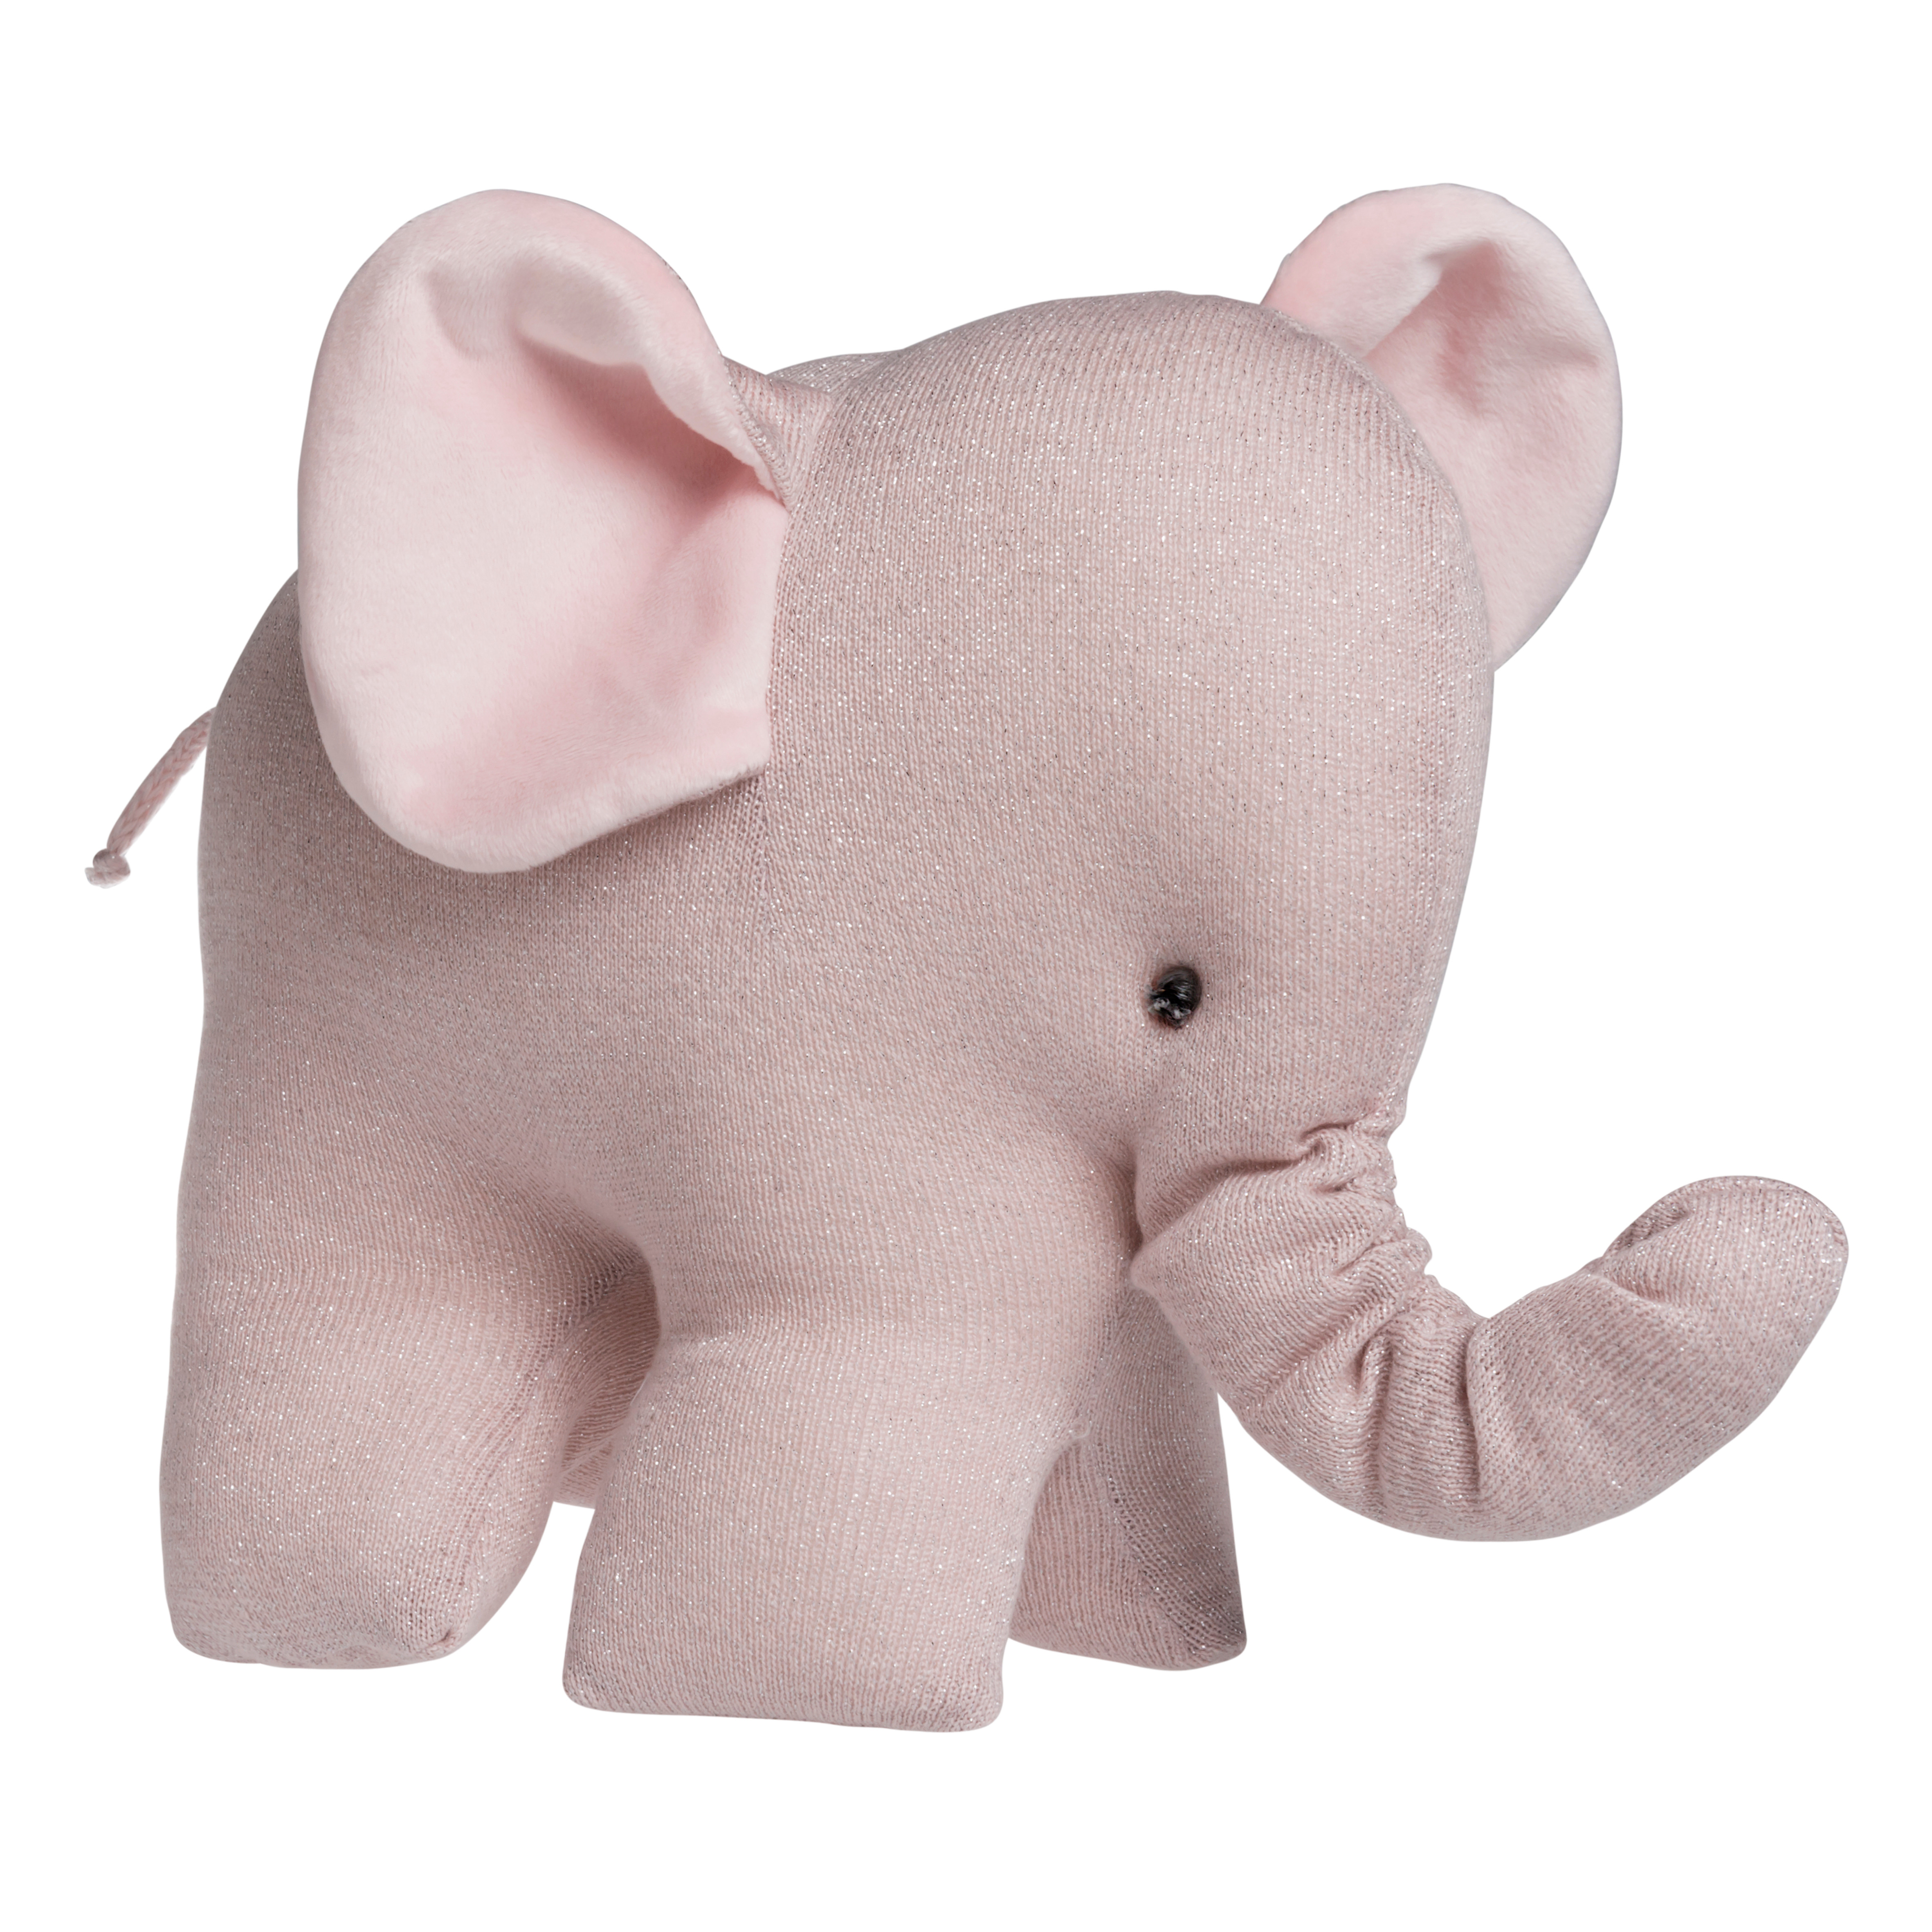 Knuffelolifant Sparkle zilver-roze mêlee